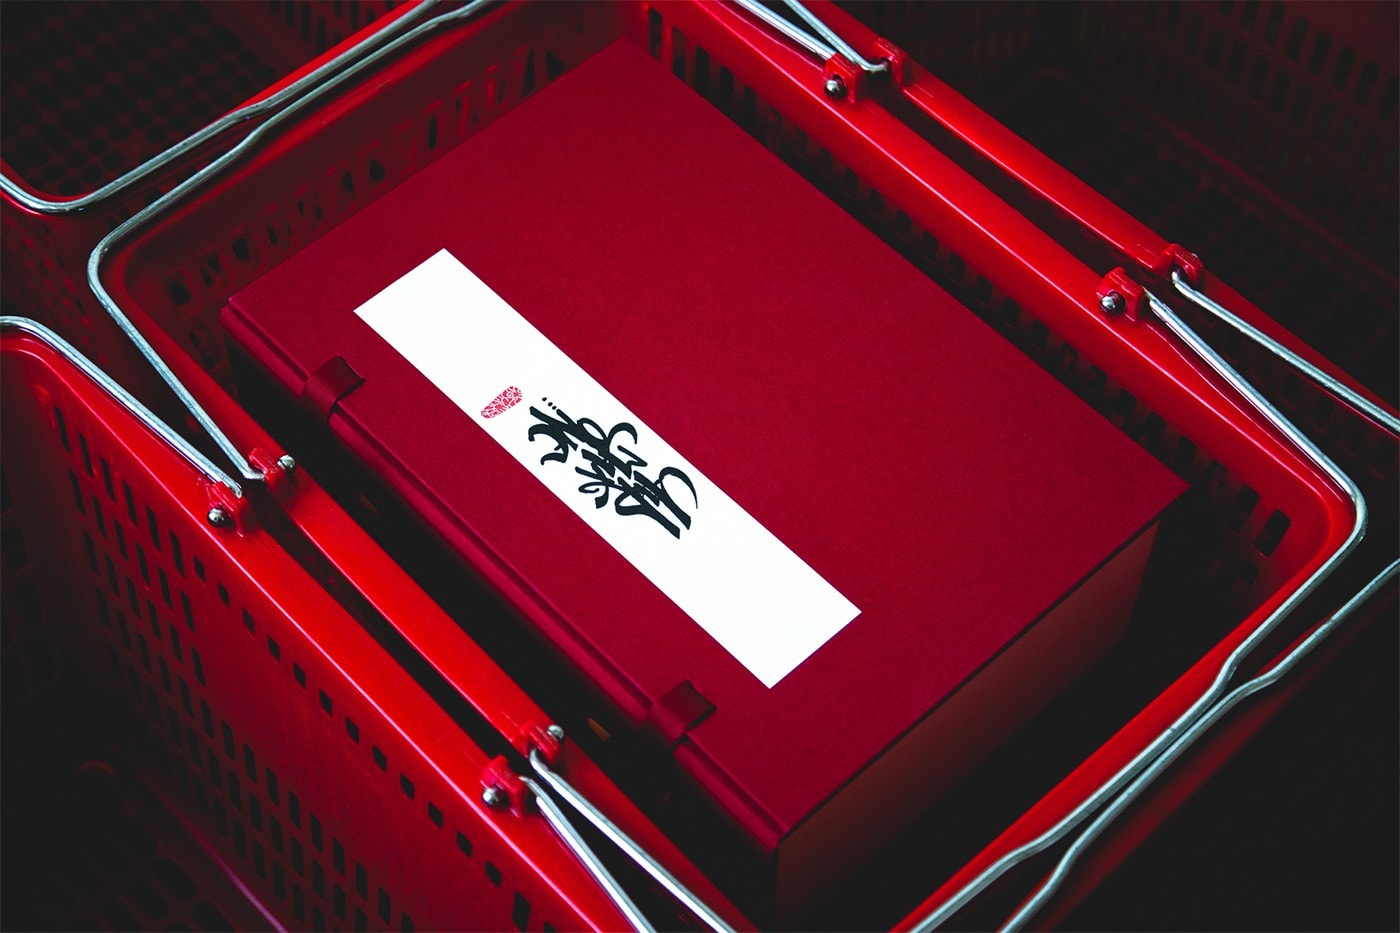 HYPEBEAST 完整近賞 CLOT x Nike Air Max 1 最新配色「K.O.D. Solar Red」